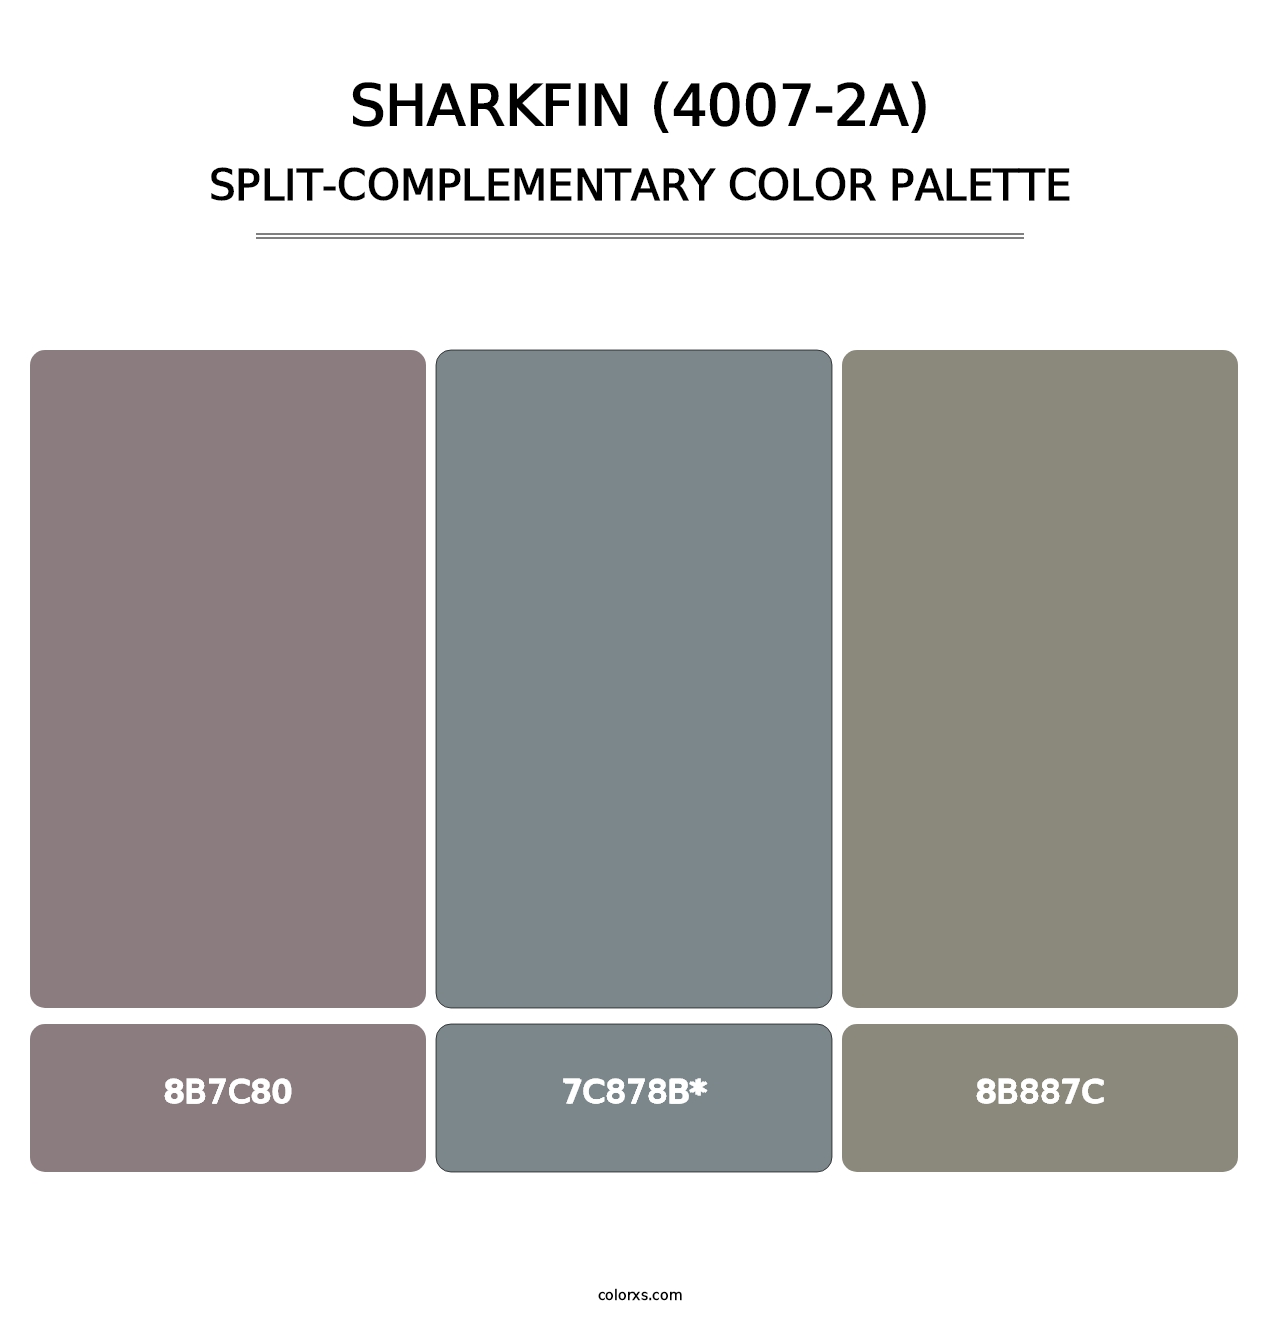 Sharkfin (4007-2A) - Split-Complementary Color Palette